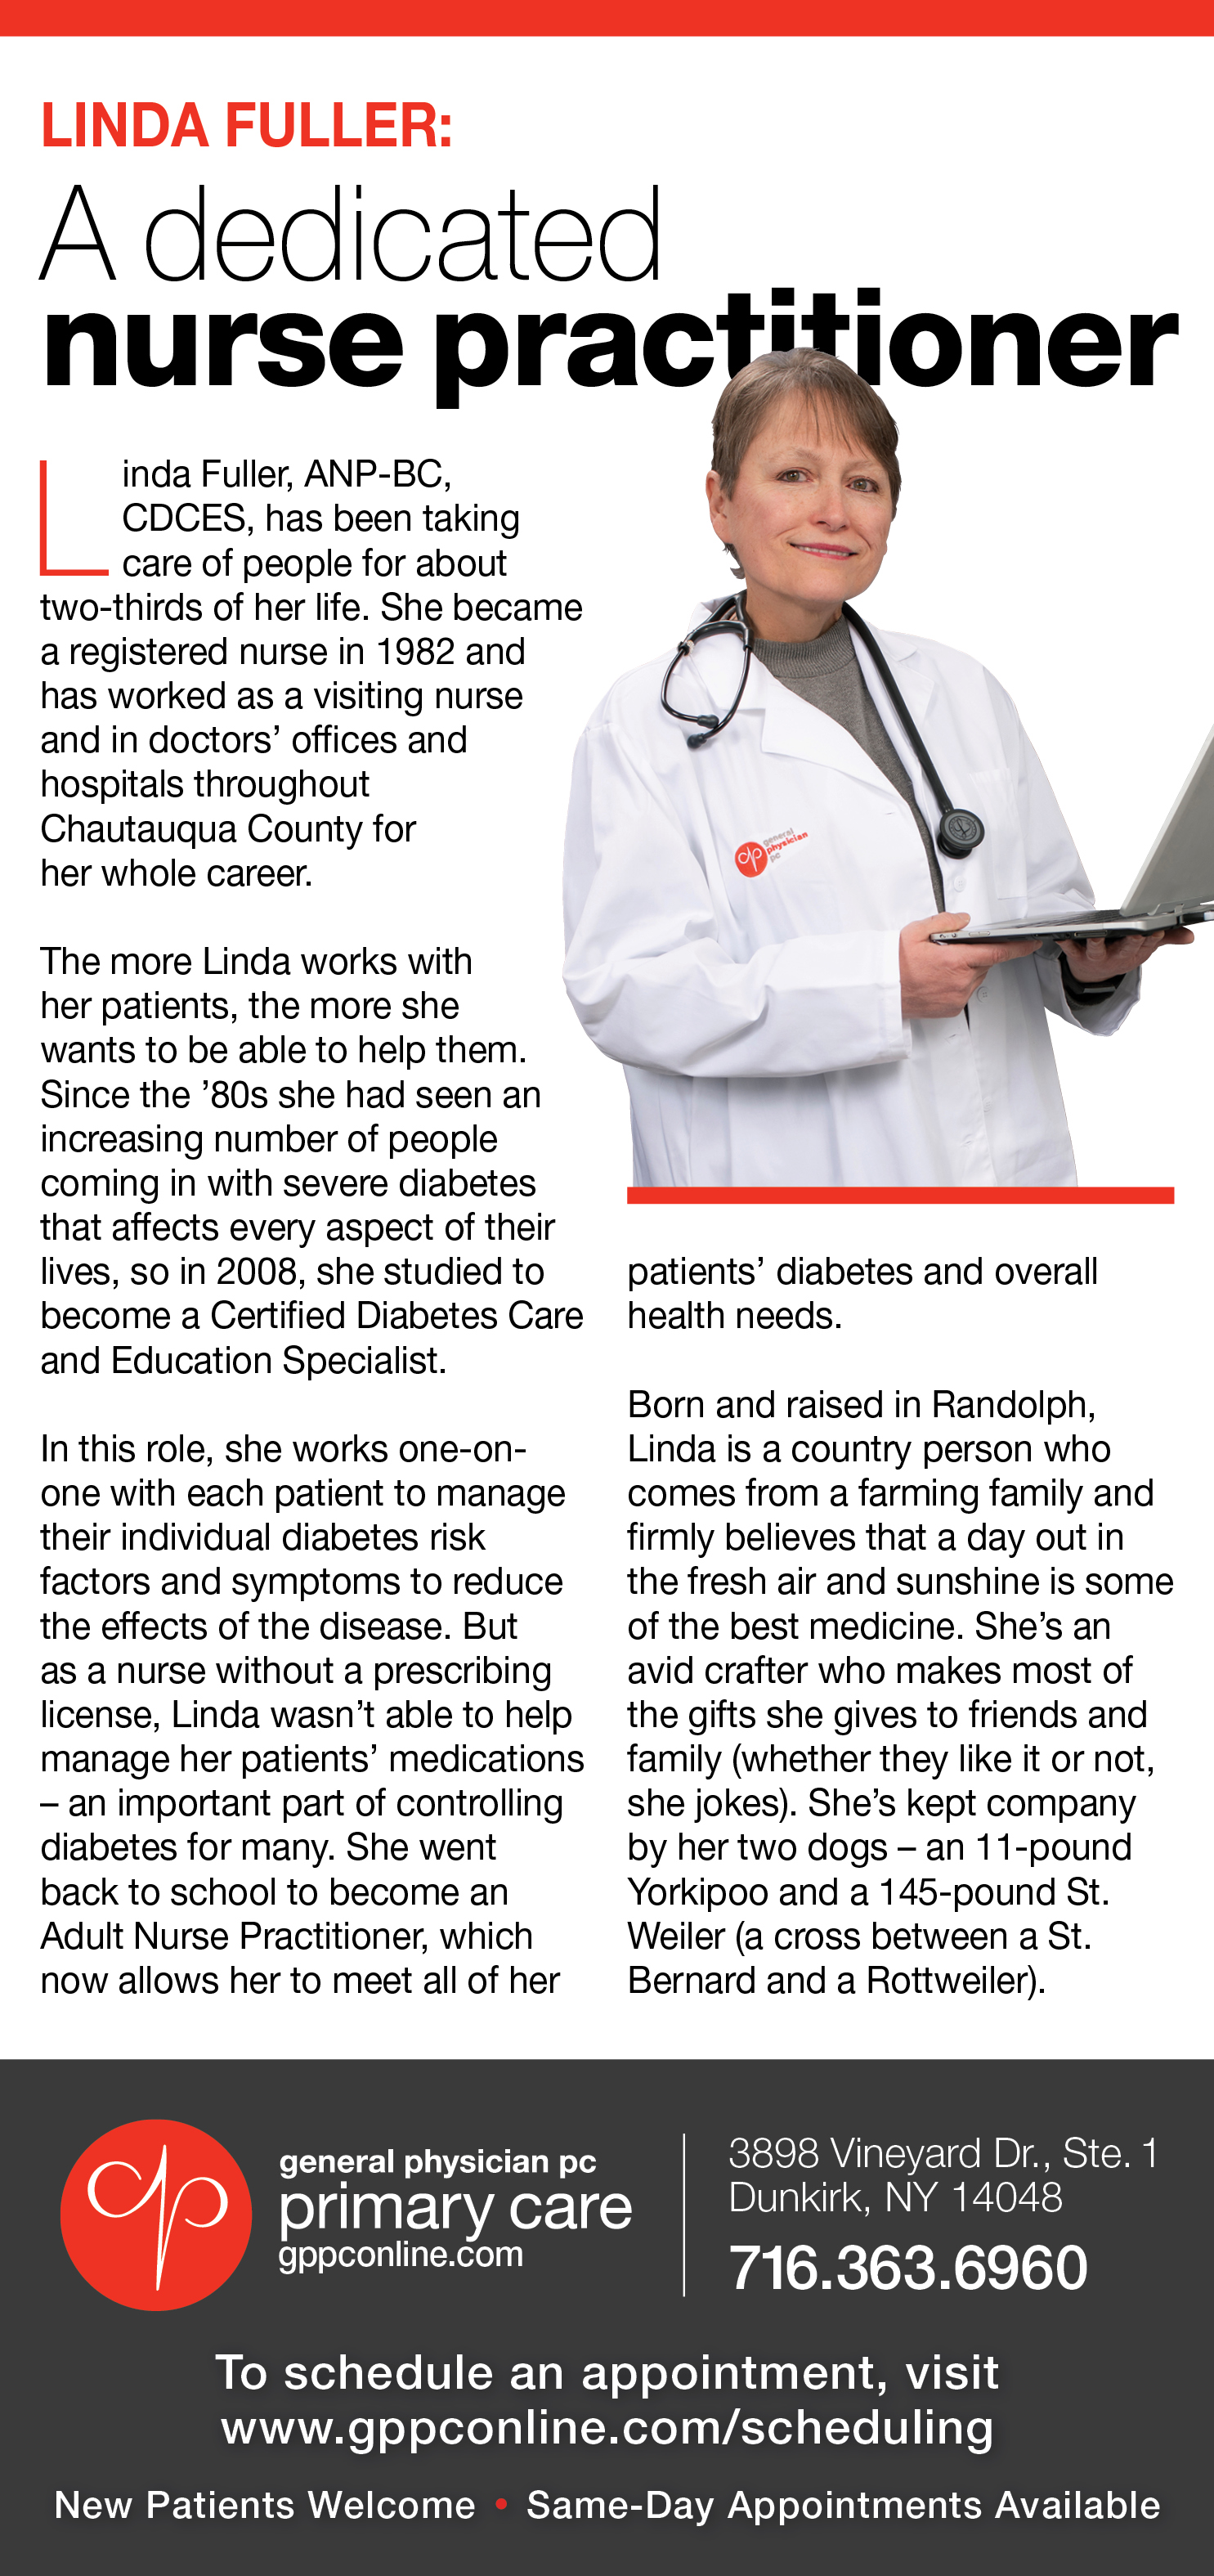 Linda Fuller: A Dedicated Nurse Practitioner